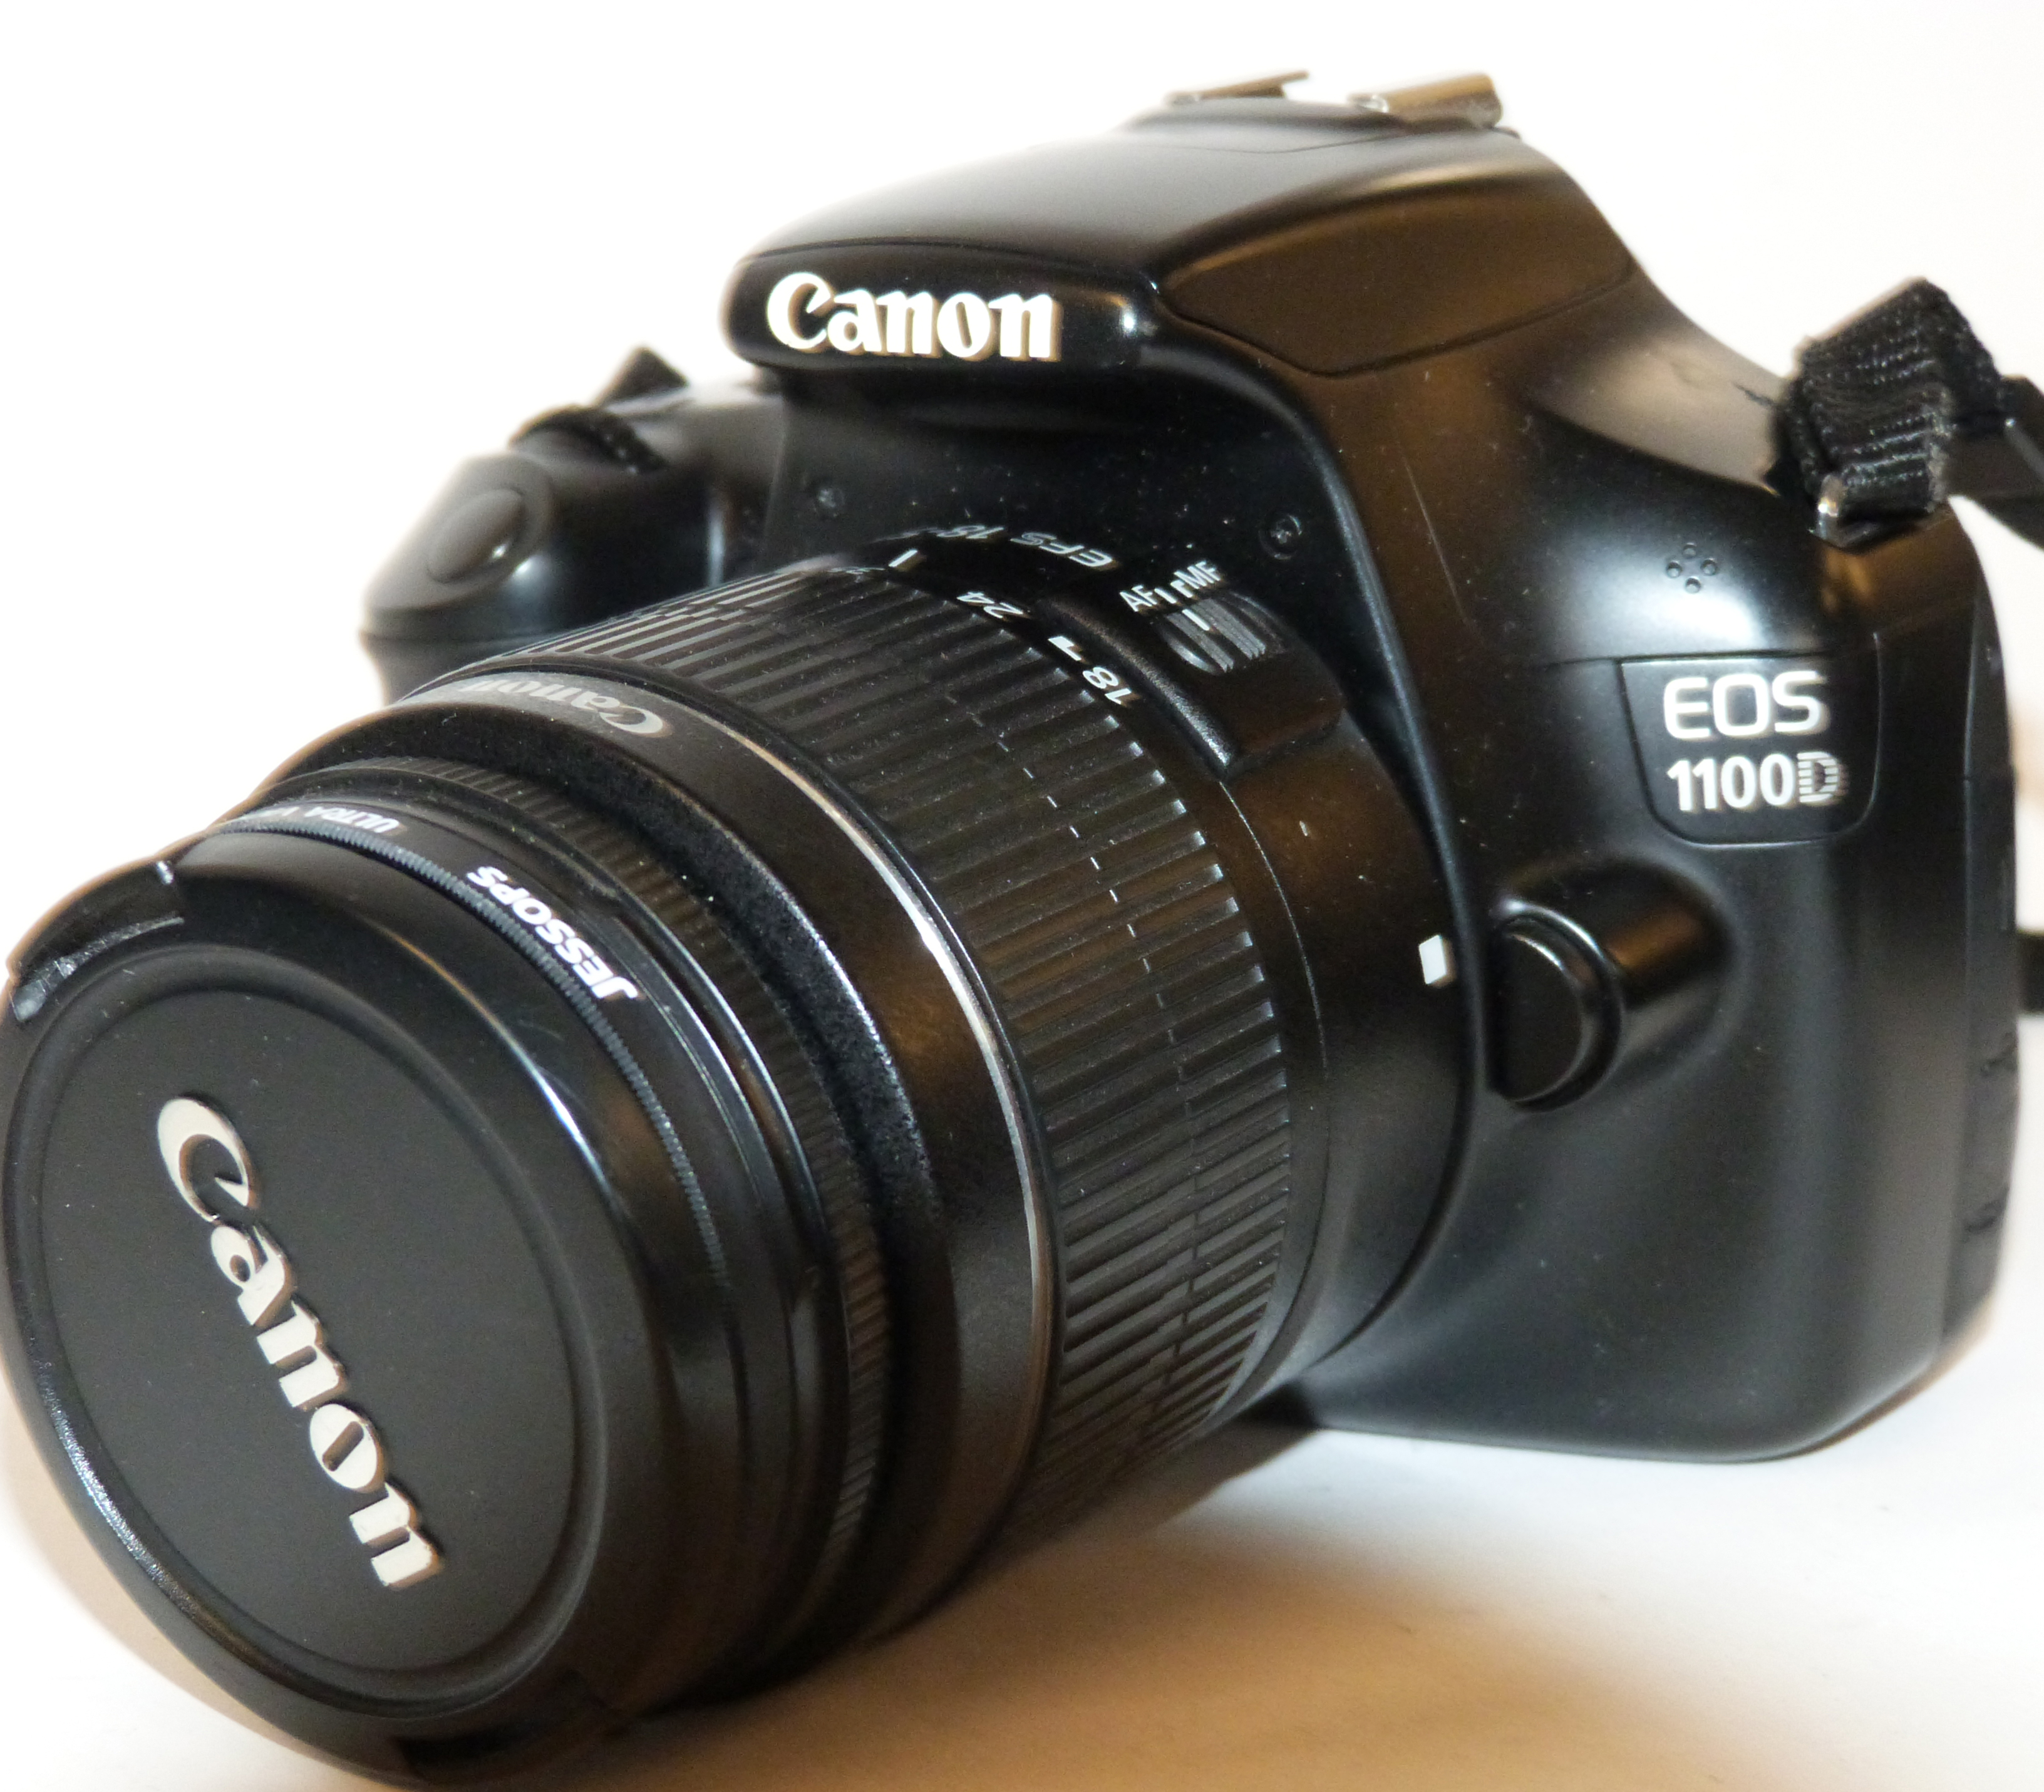 Canon EOS 1100 D digital camera together with Canon zoom lens EF-S 18-55mm, Tamron AF 70-300mm lens, - Image 2 of 6